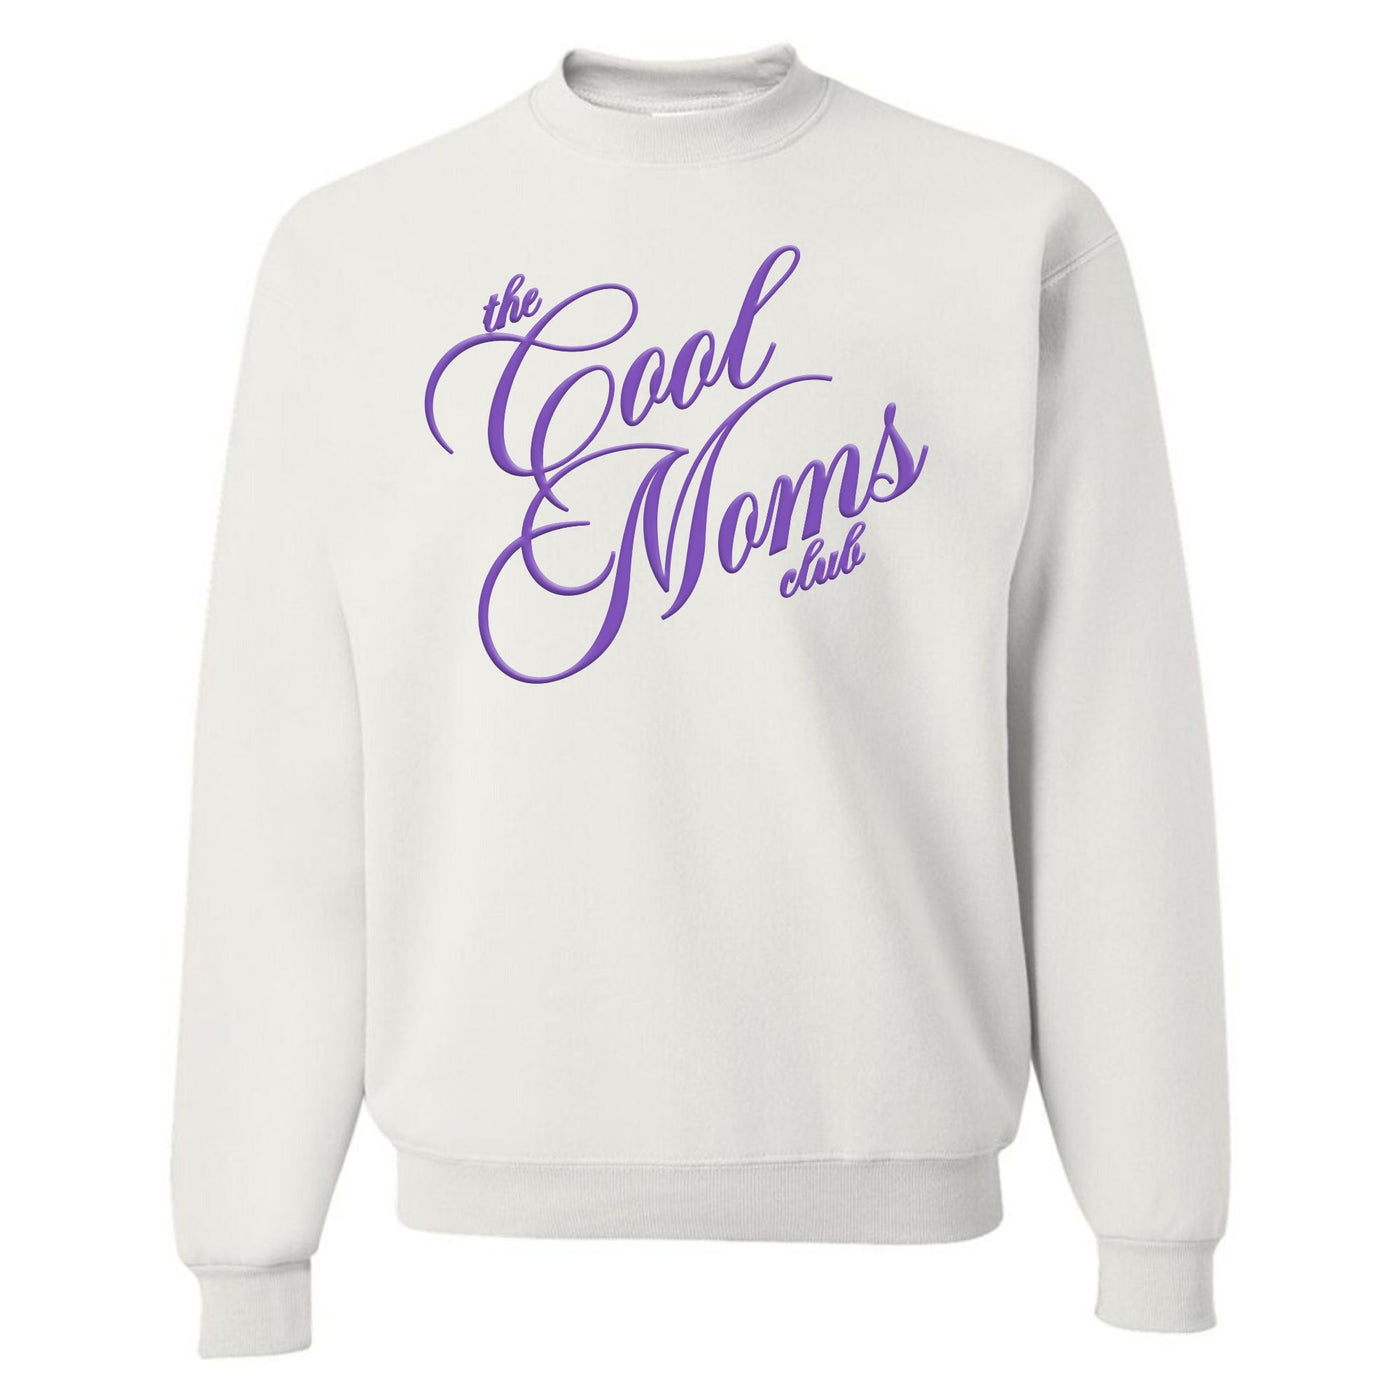 'The Cool Moms Club' PUFF Crewneck Sweatshirt